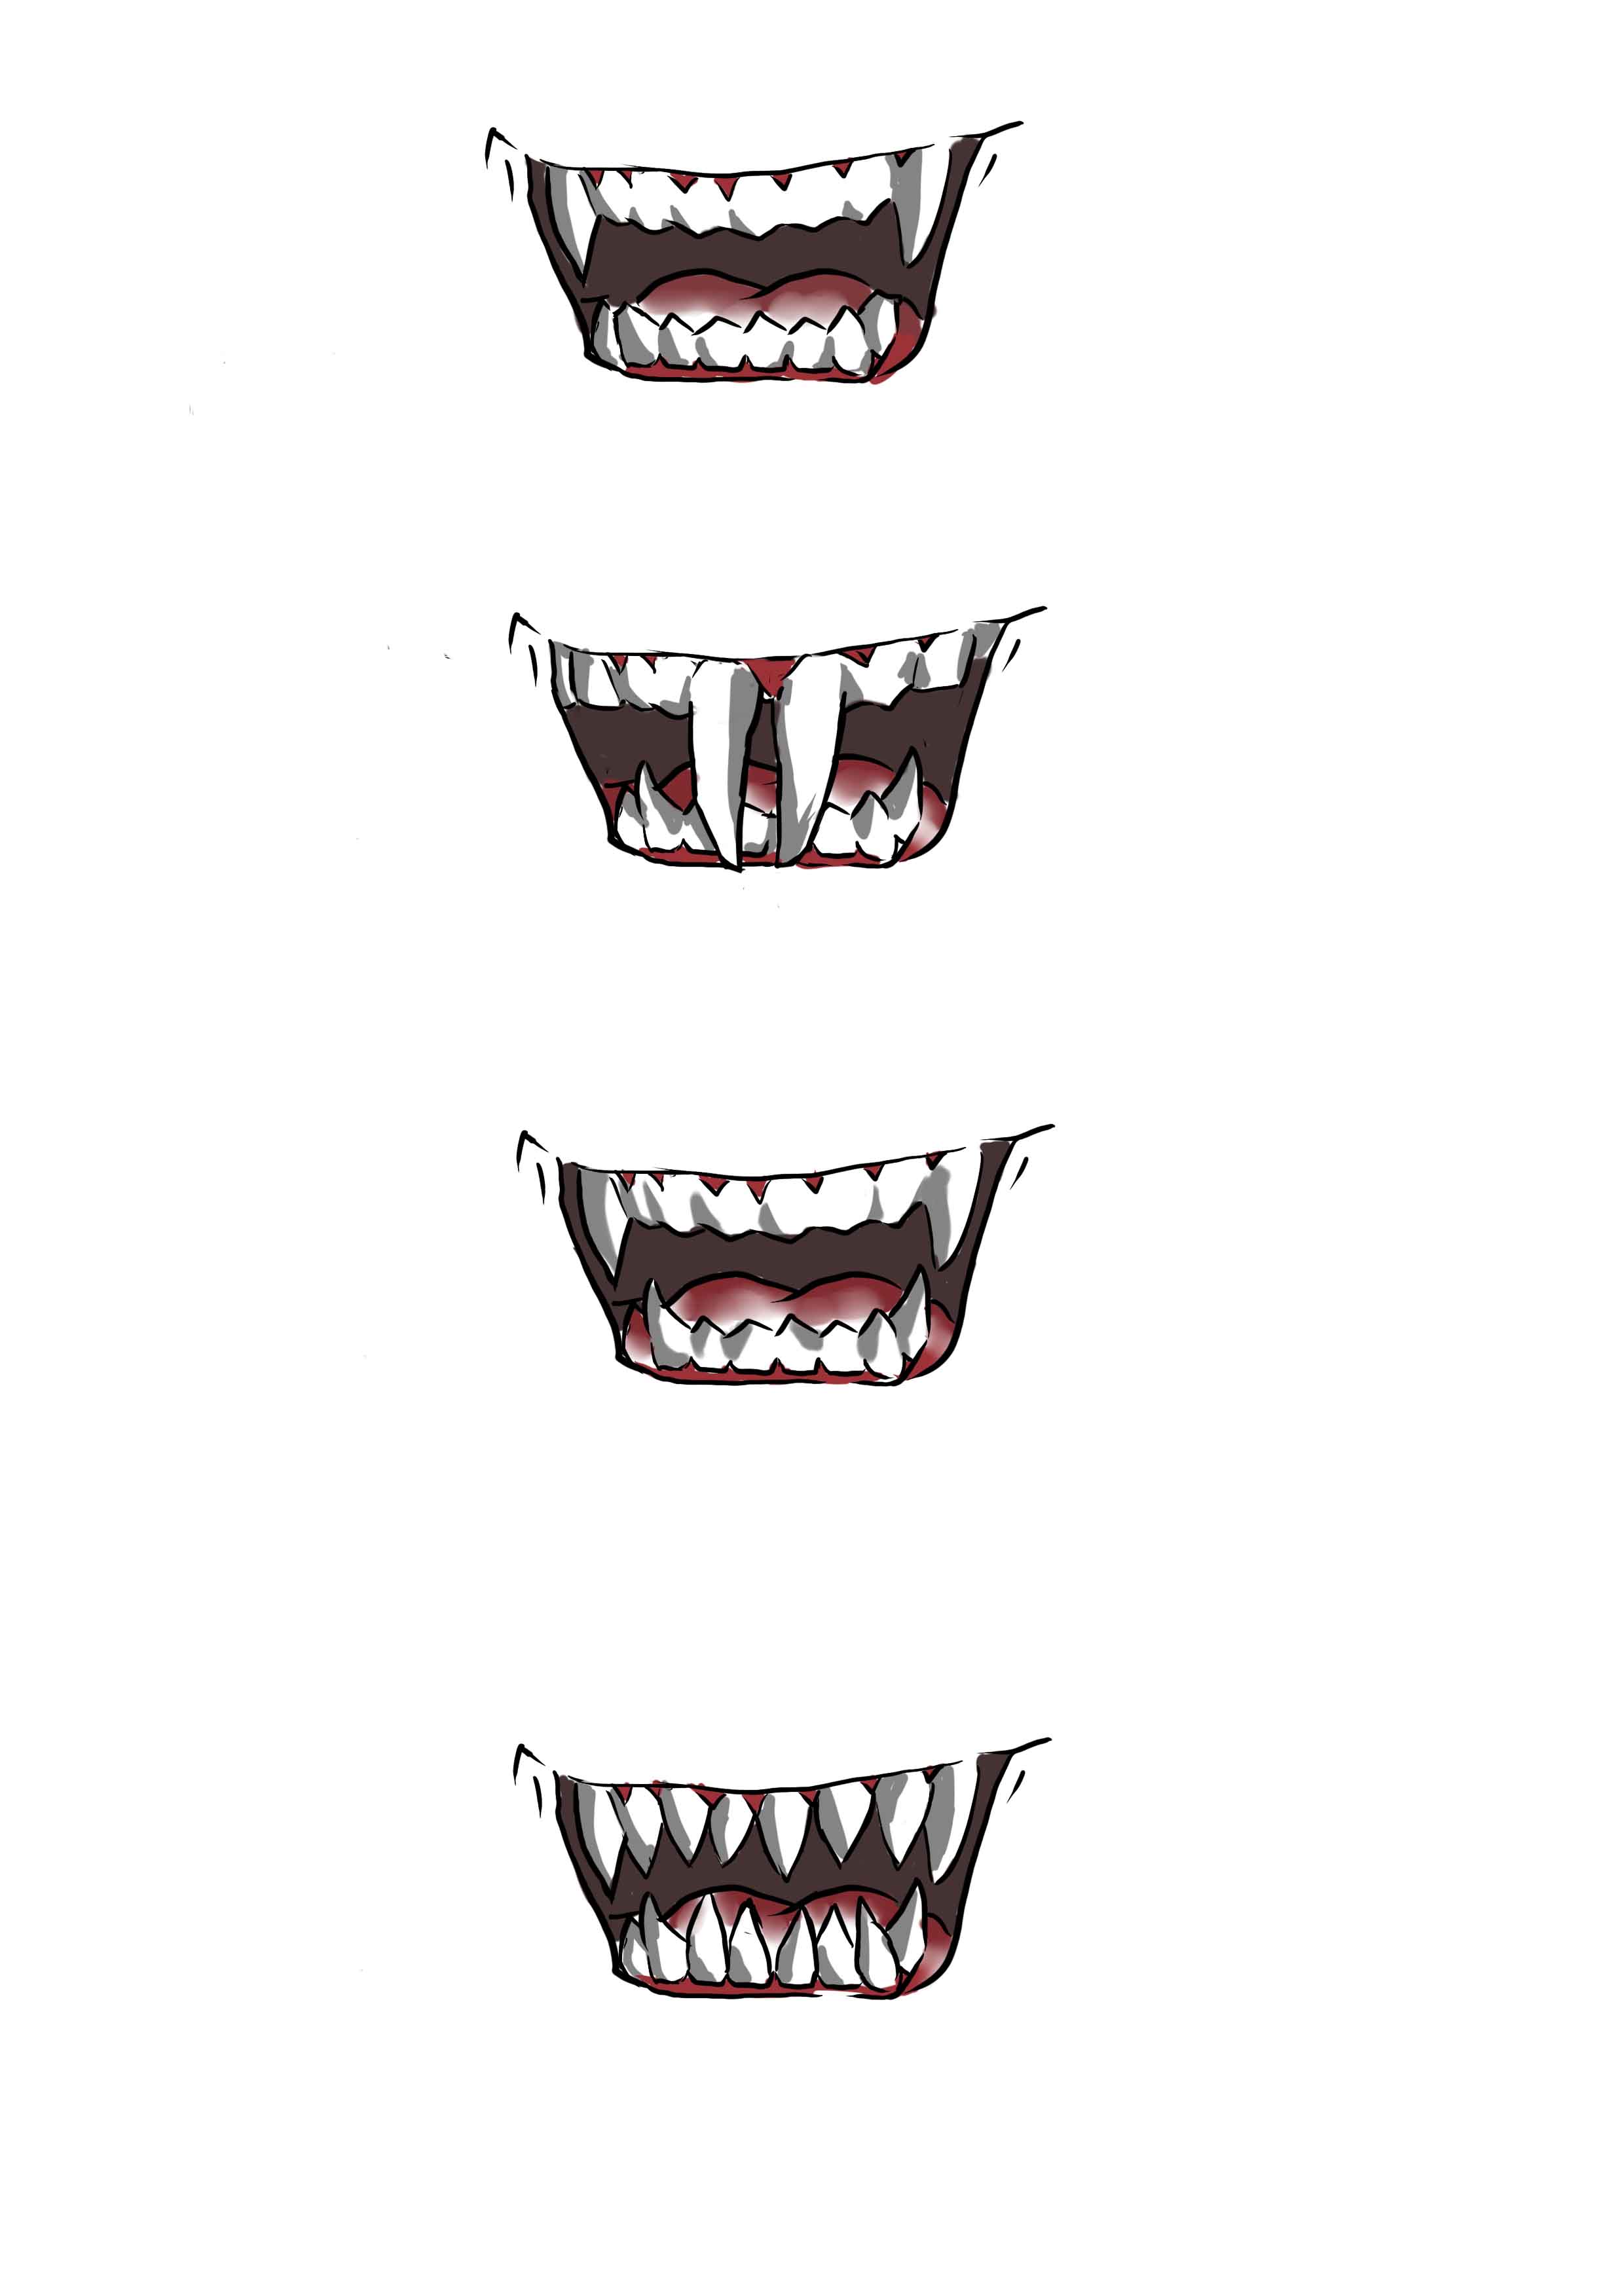 2480x3507 life as vampire - Sharp Teeth Drawing.